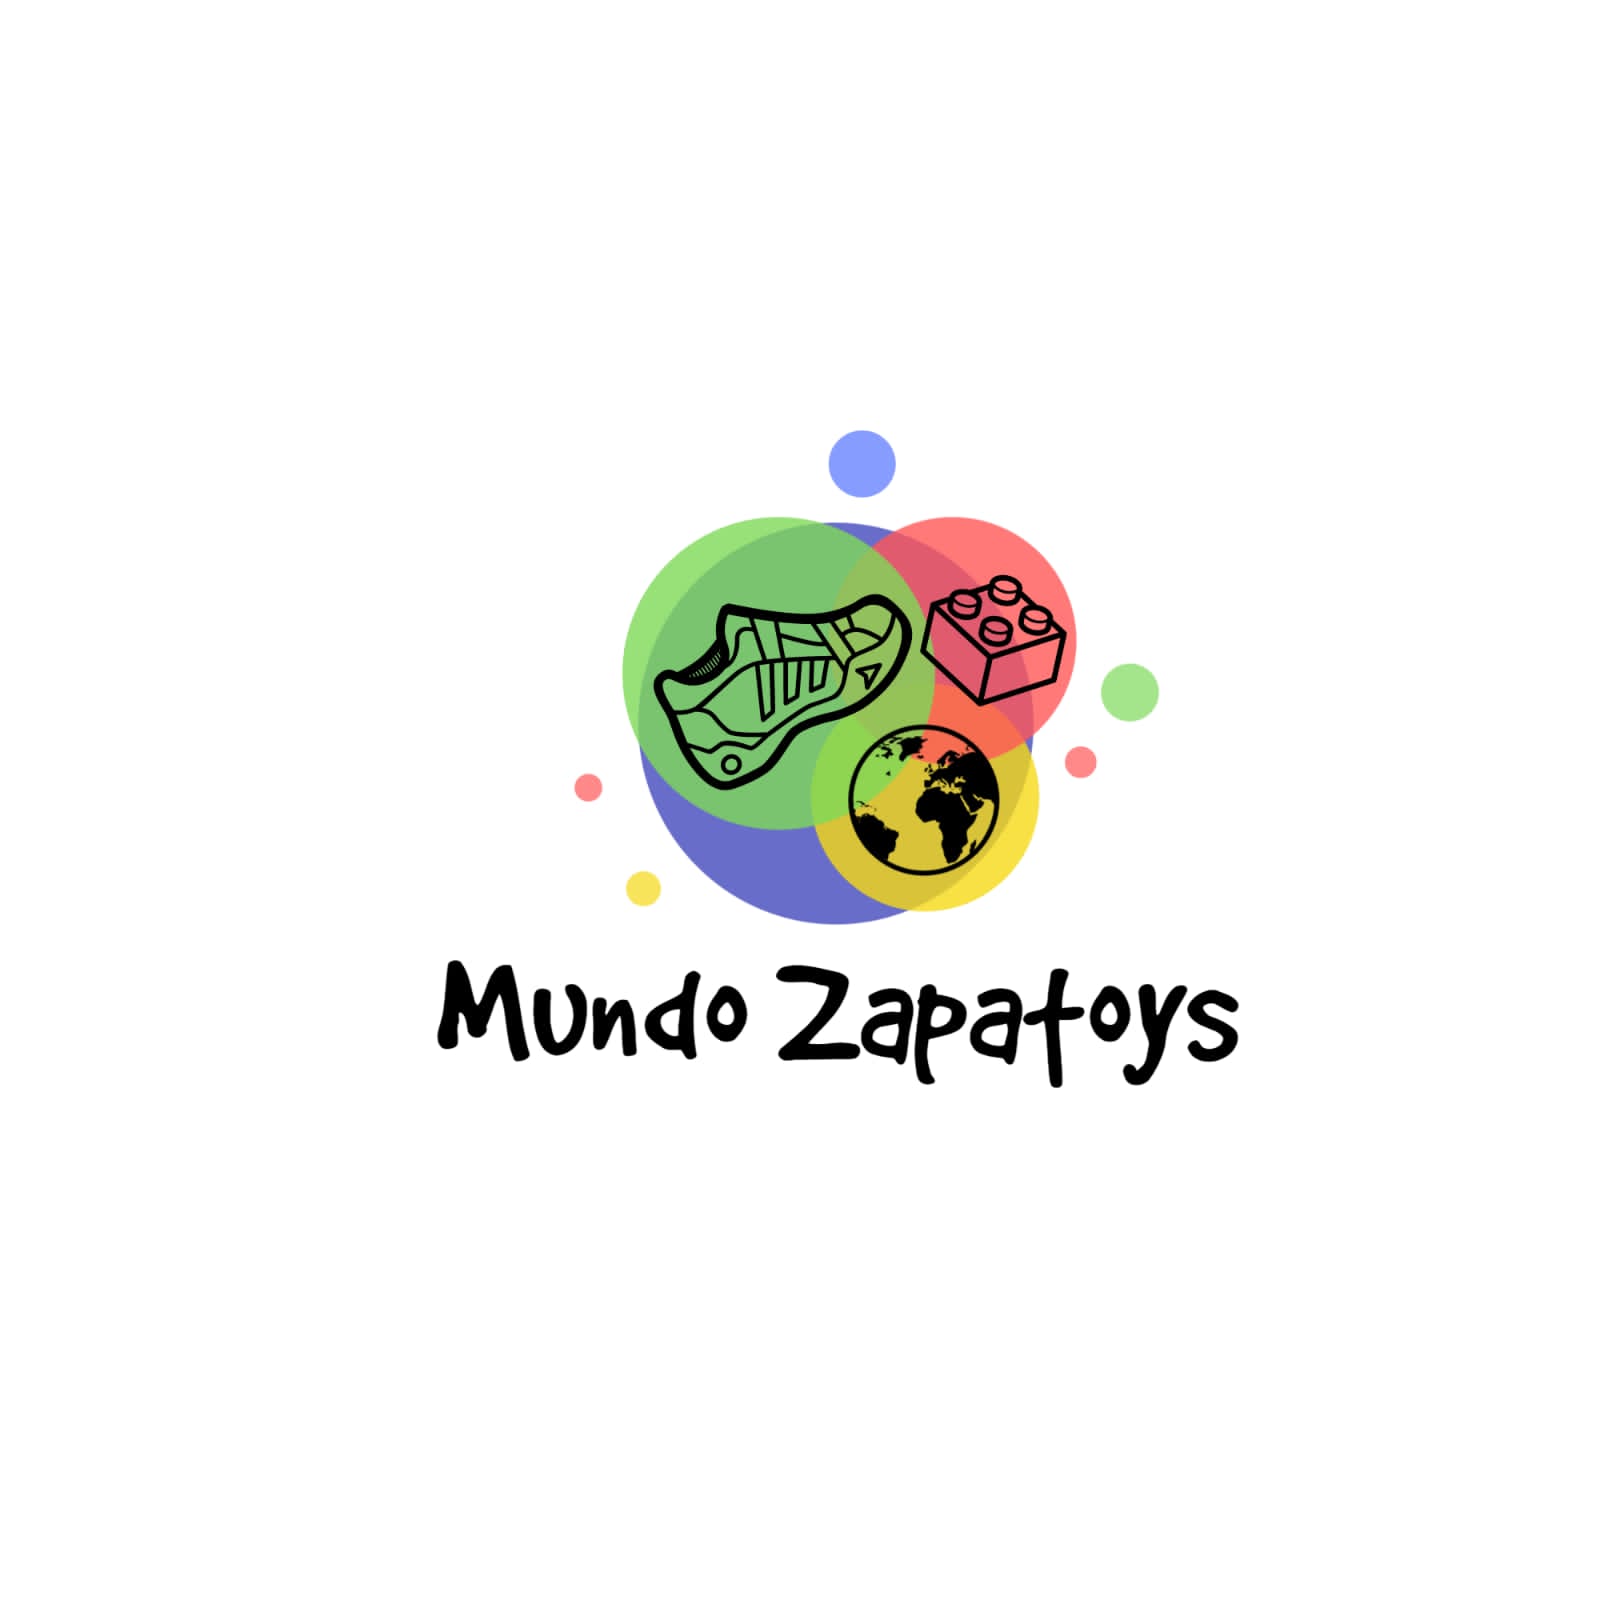 MUNDO ZAPATOYS